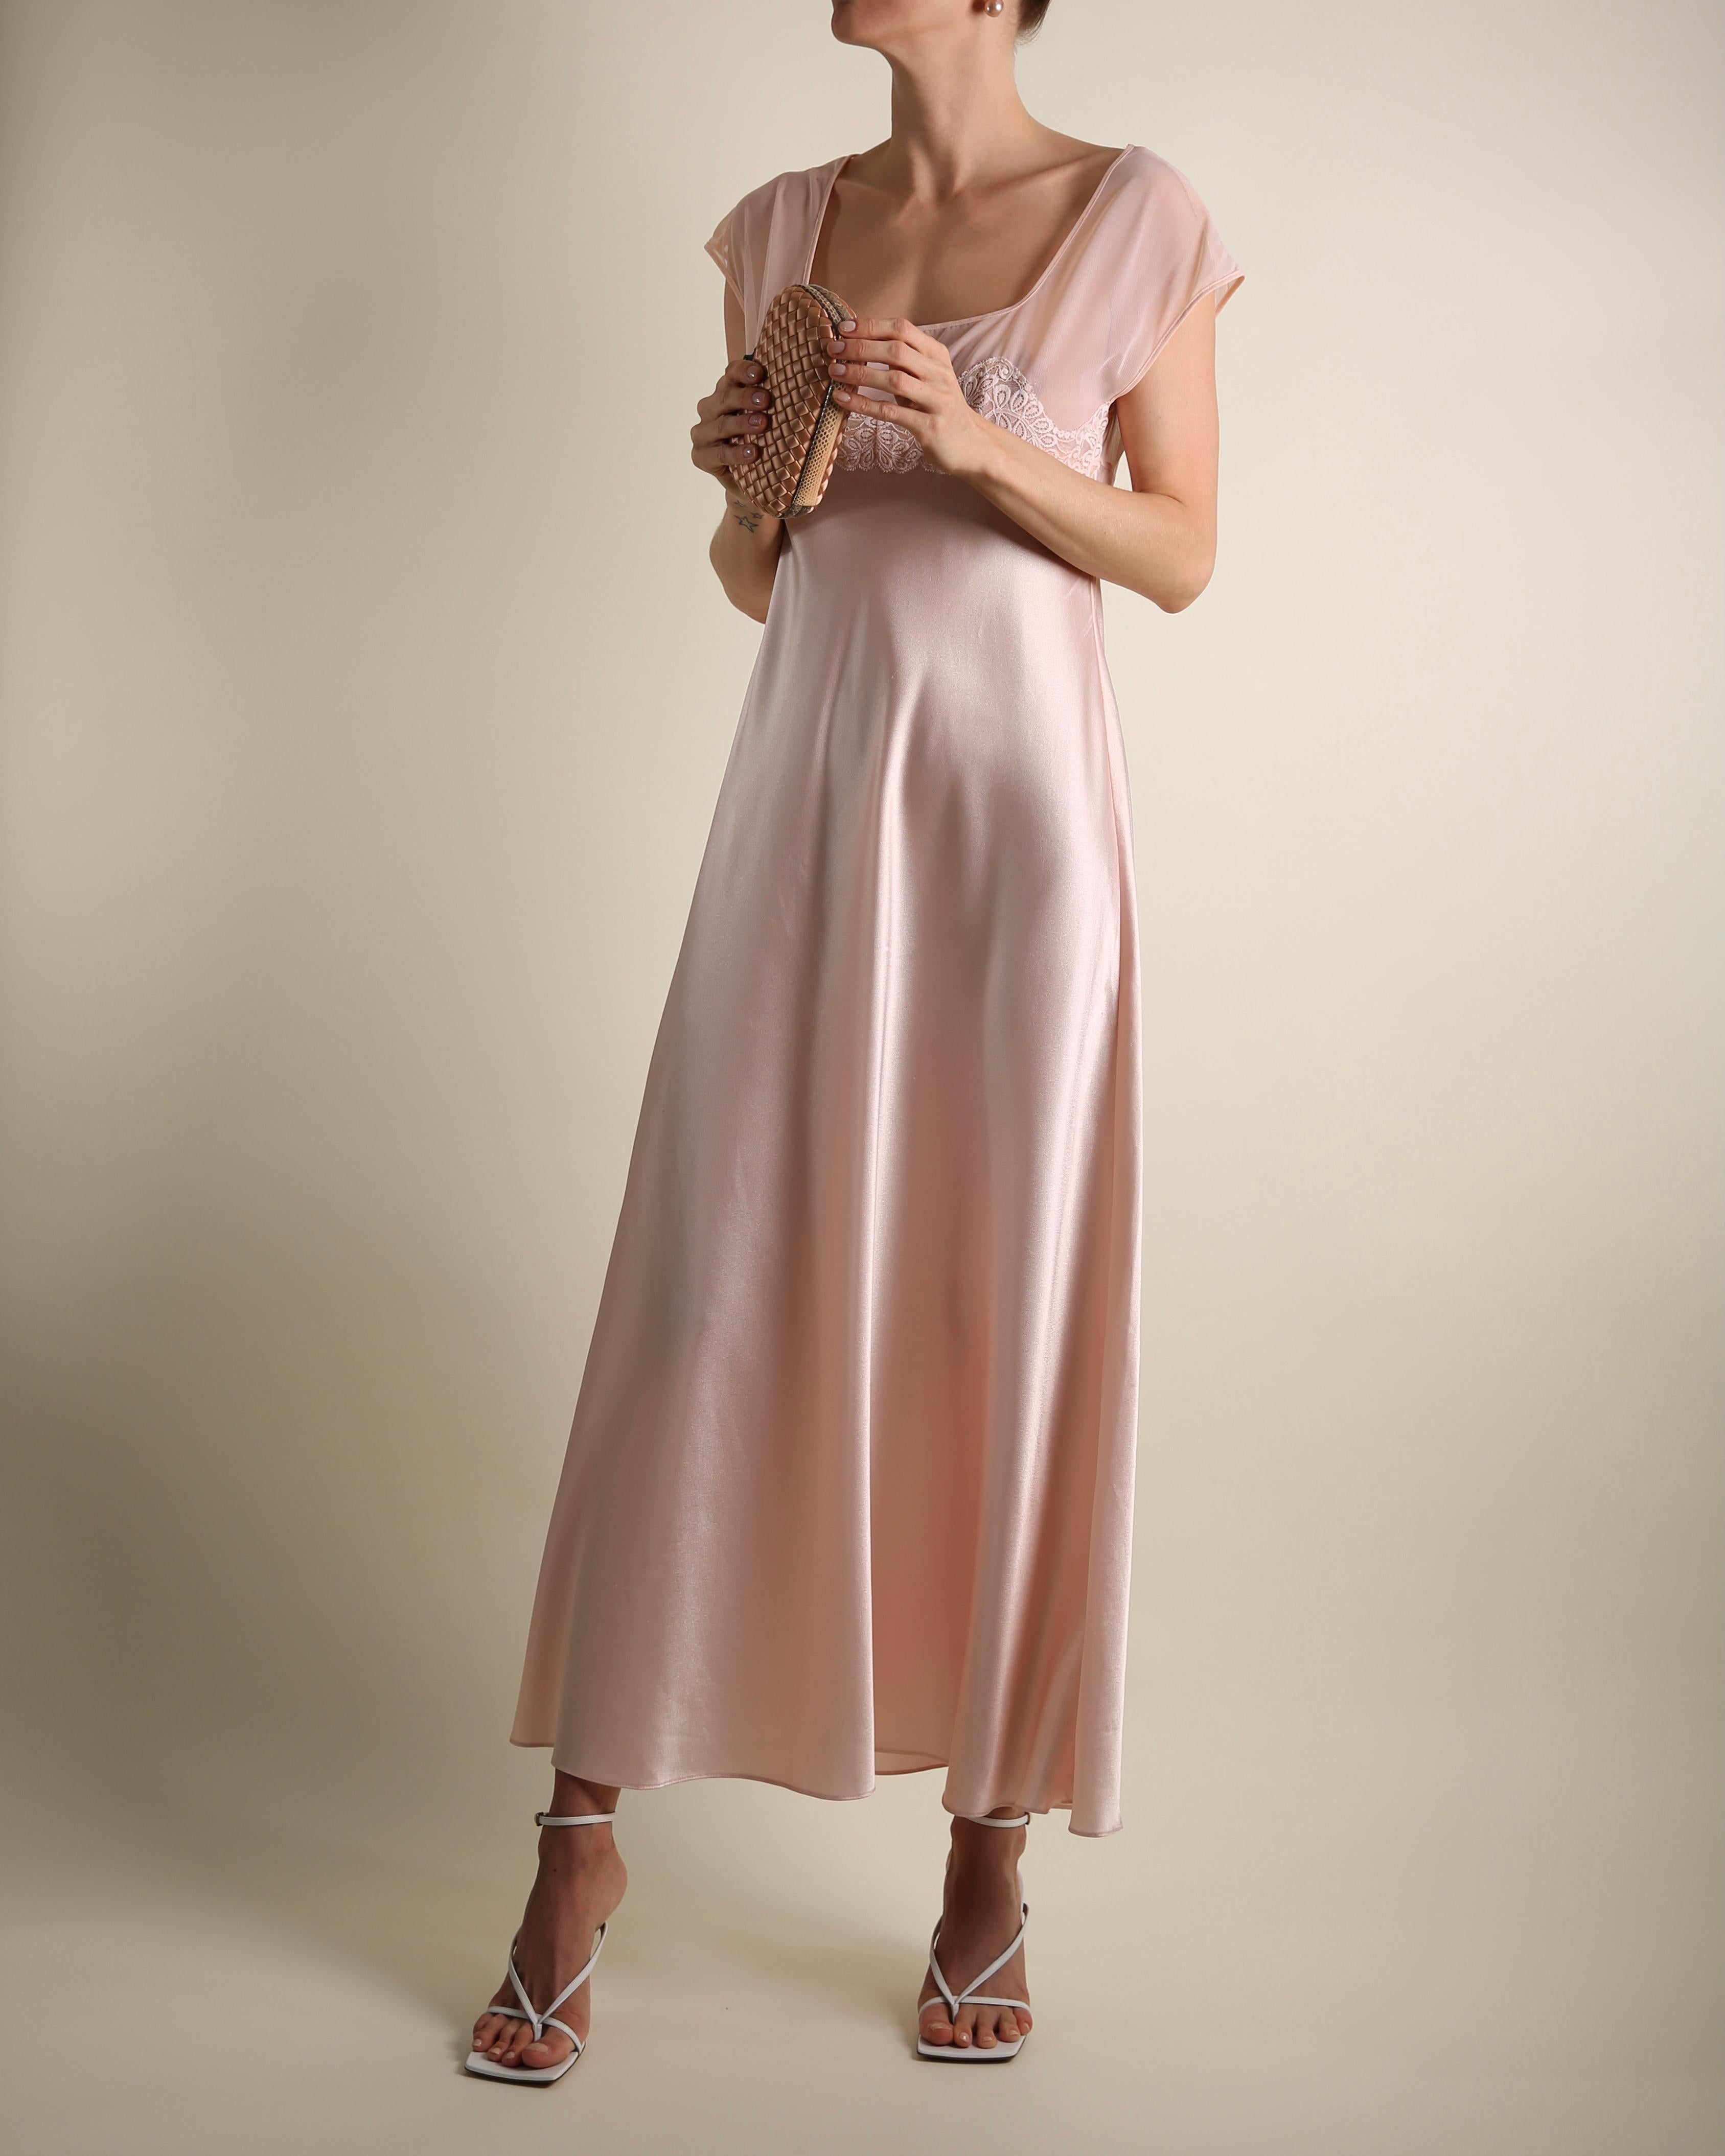 Valentino Intimo vintage pink satin sheer lace slip robe night gown midi dress  2